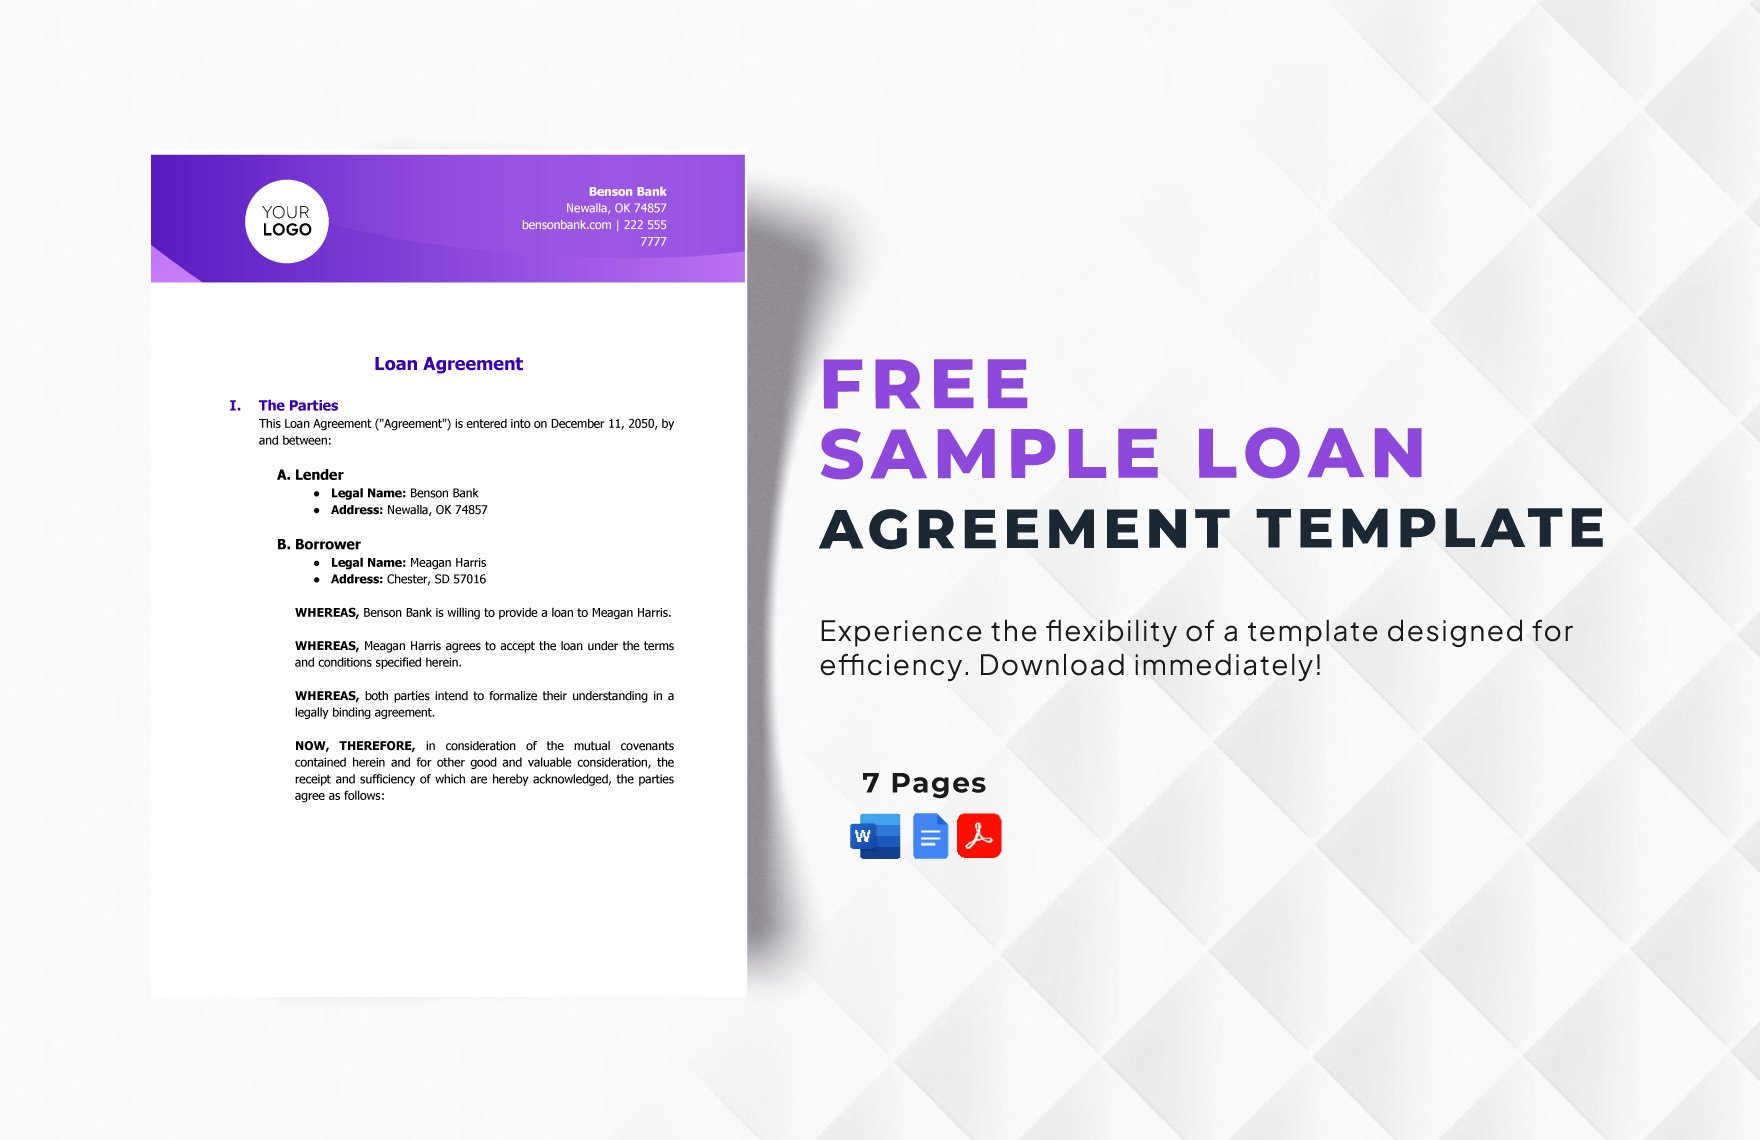 Free Sample Loan Agreement Template in Word, Google Docs, PDF